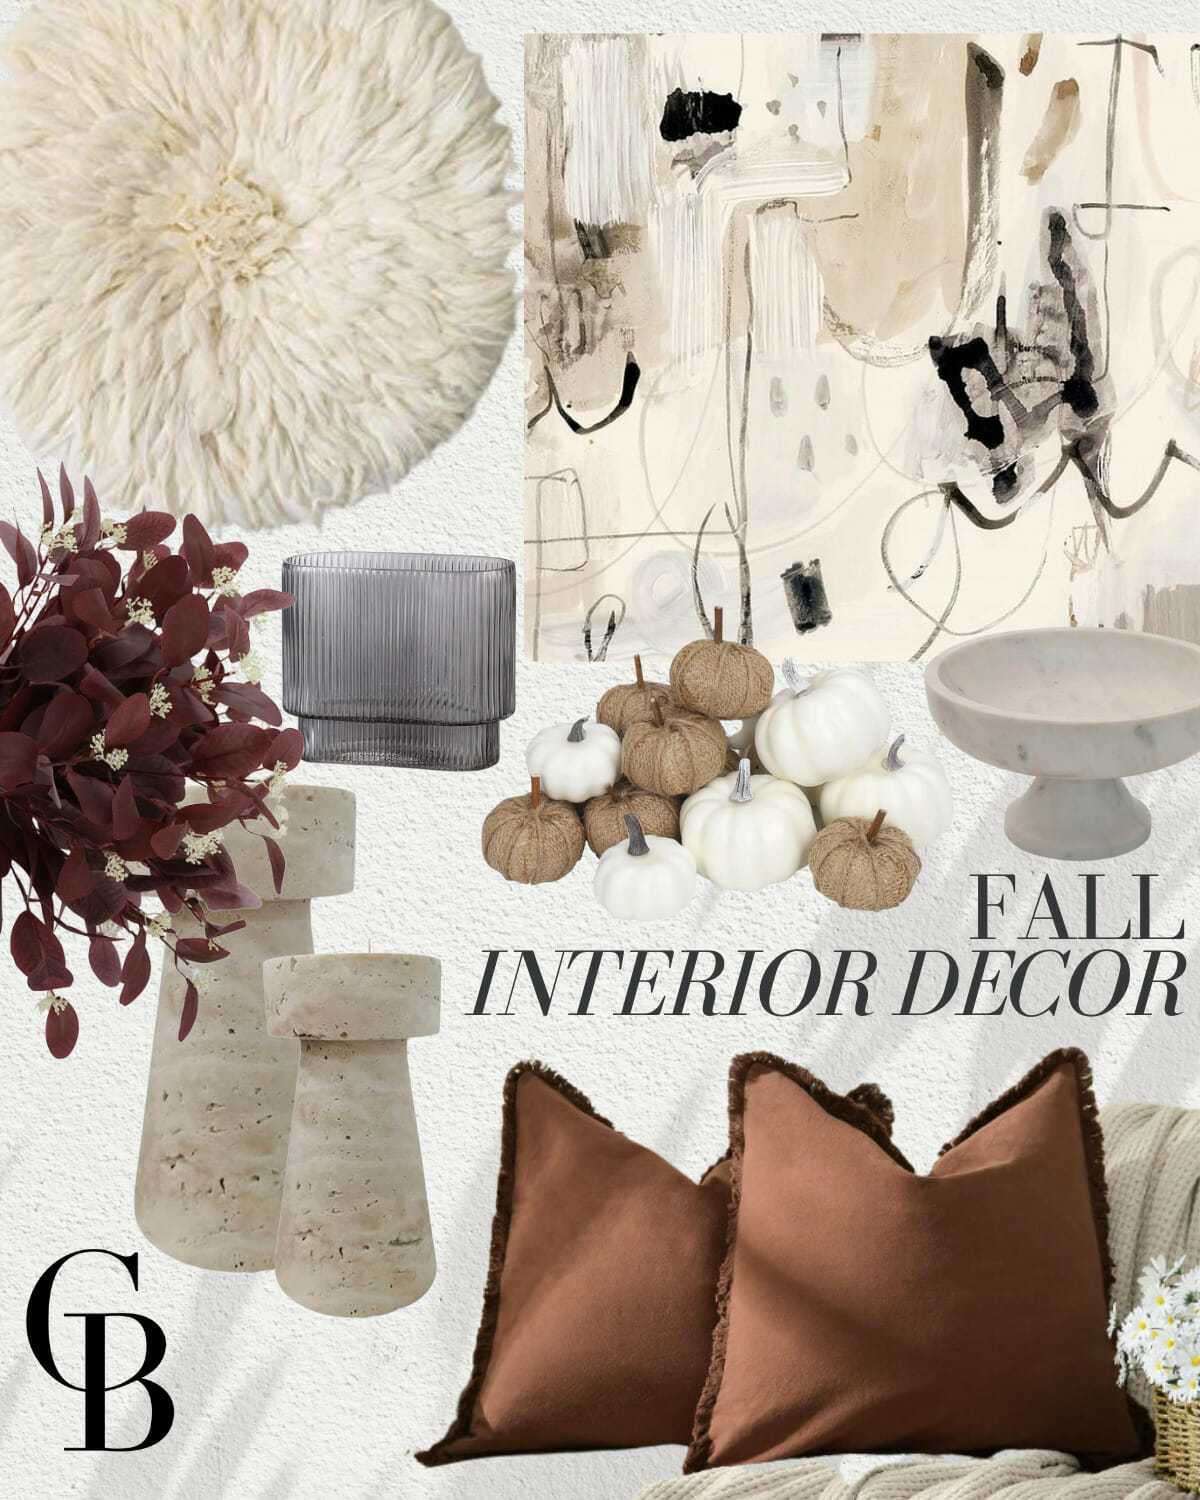 Fall Decor Interior | #fall #decor #interior #homedecor #halloween #pumpkins #floral #wallart #autumn #neutral #pillows #marble